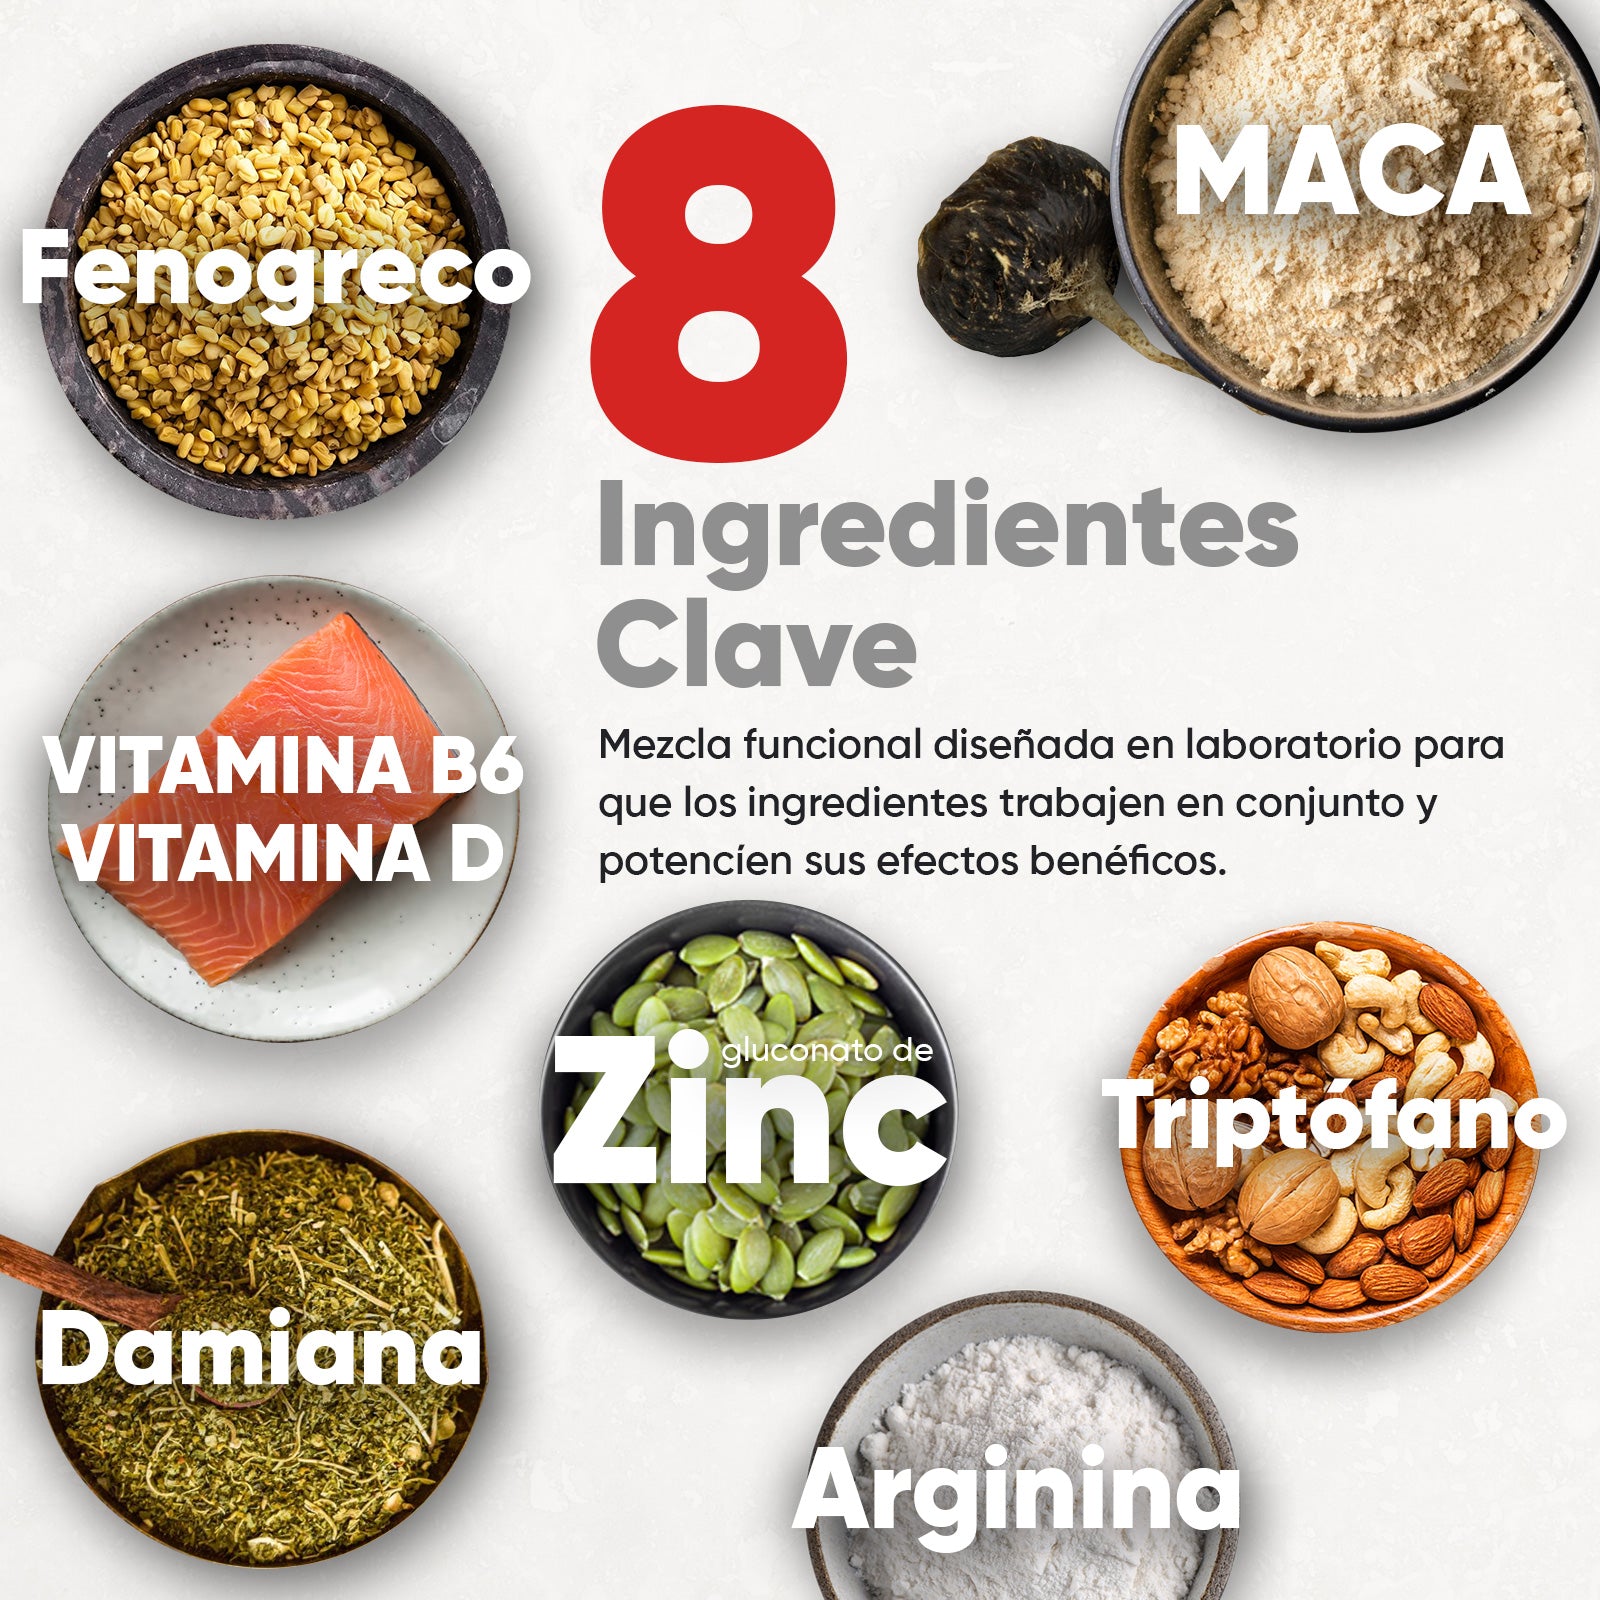 Fenogreco, Maca, Arginina, Damiana, Triptófano,  Zinc, Vitamina B6, Vitamina D,